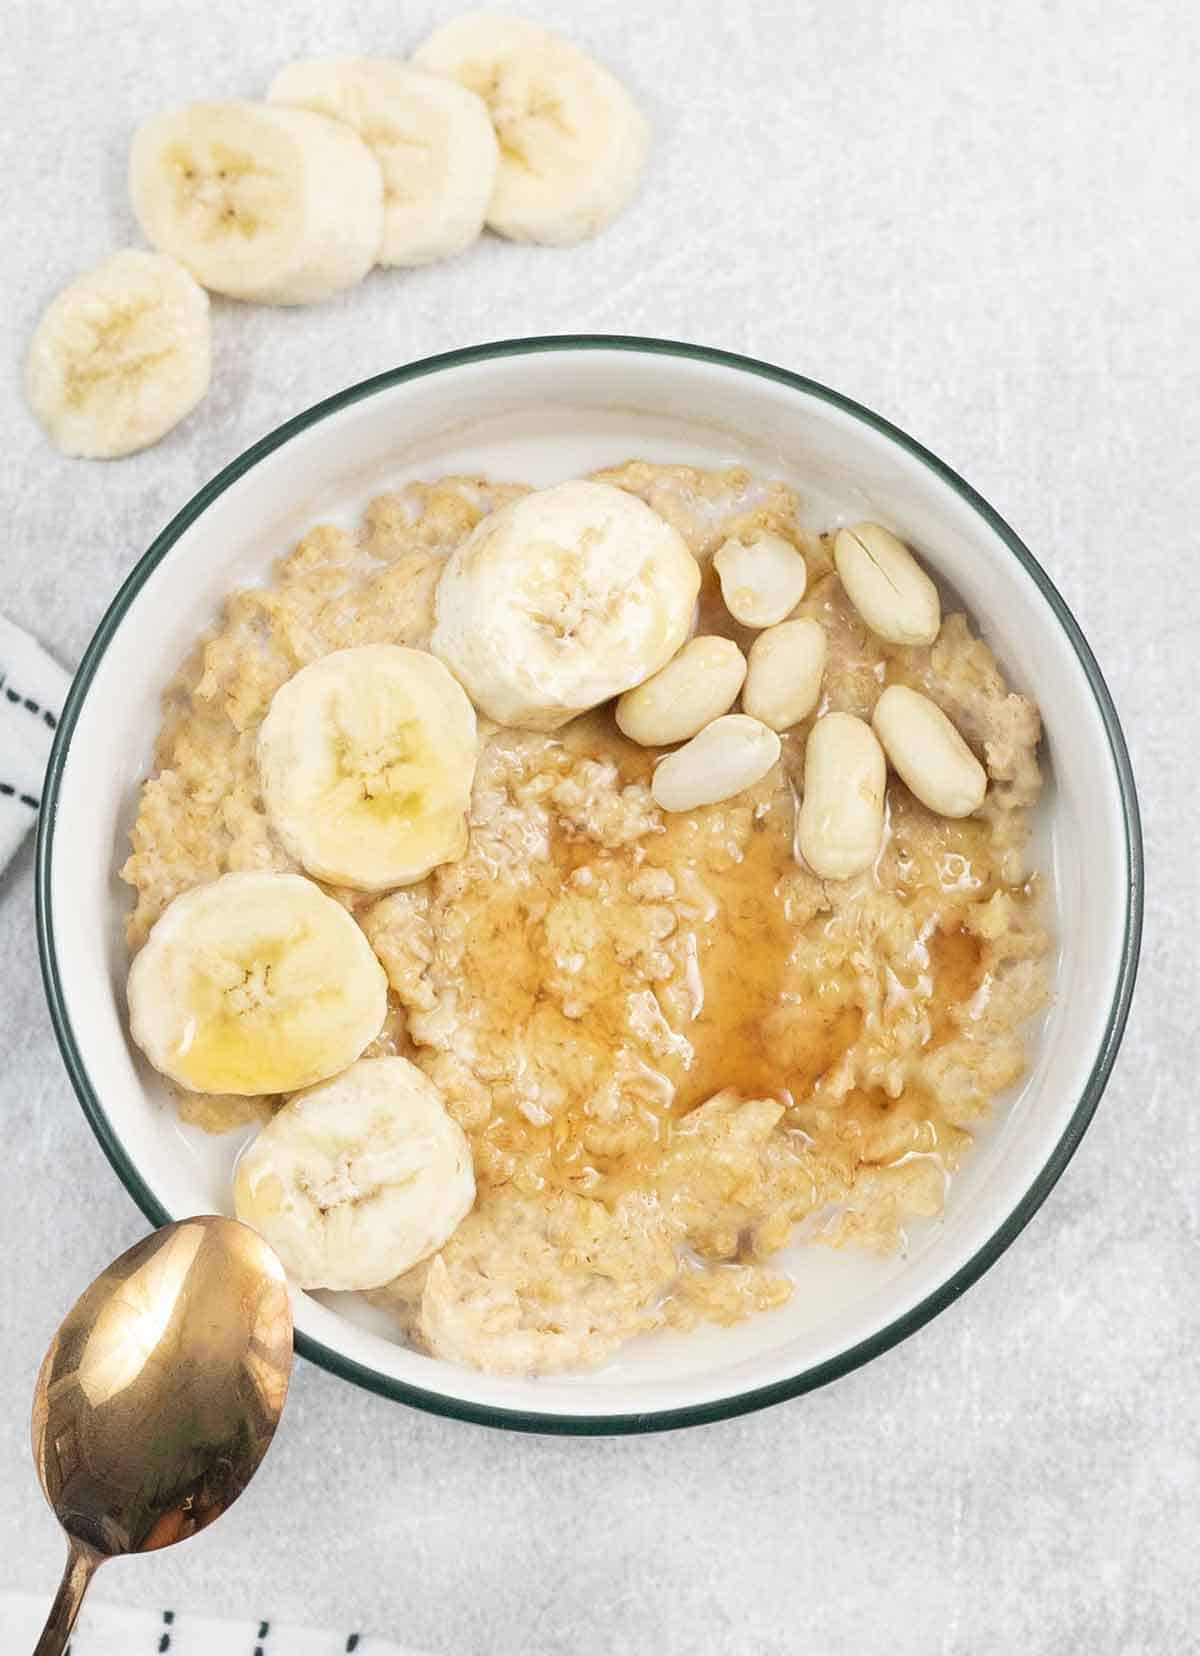 a bowl of Peanut Butter Porridge and banana slices